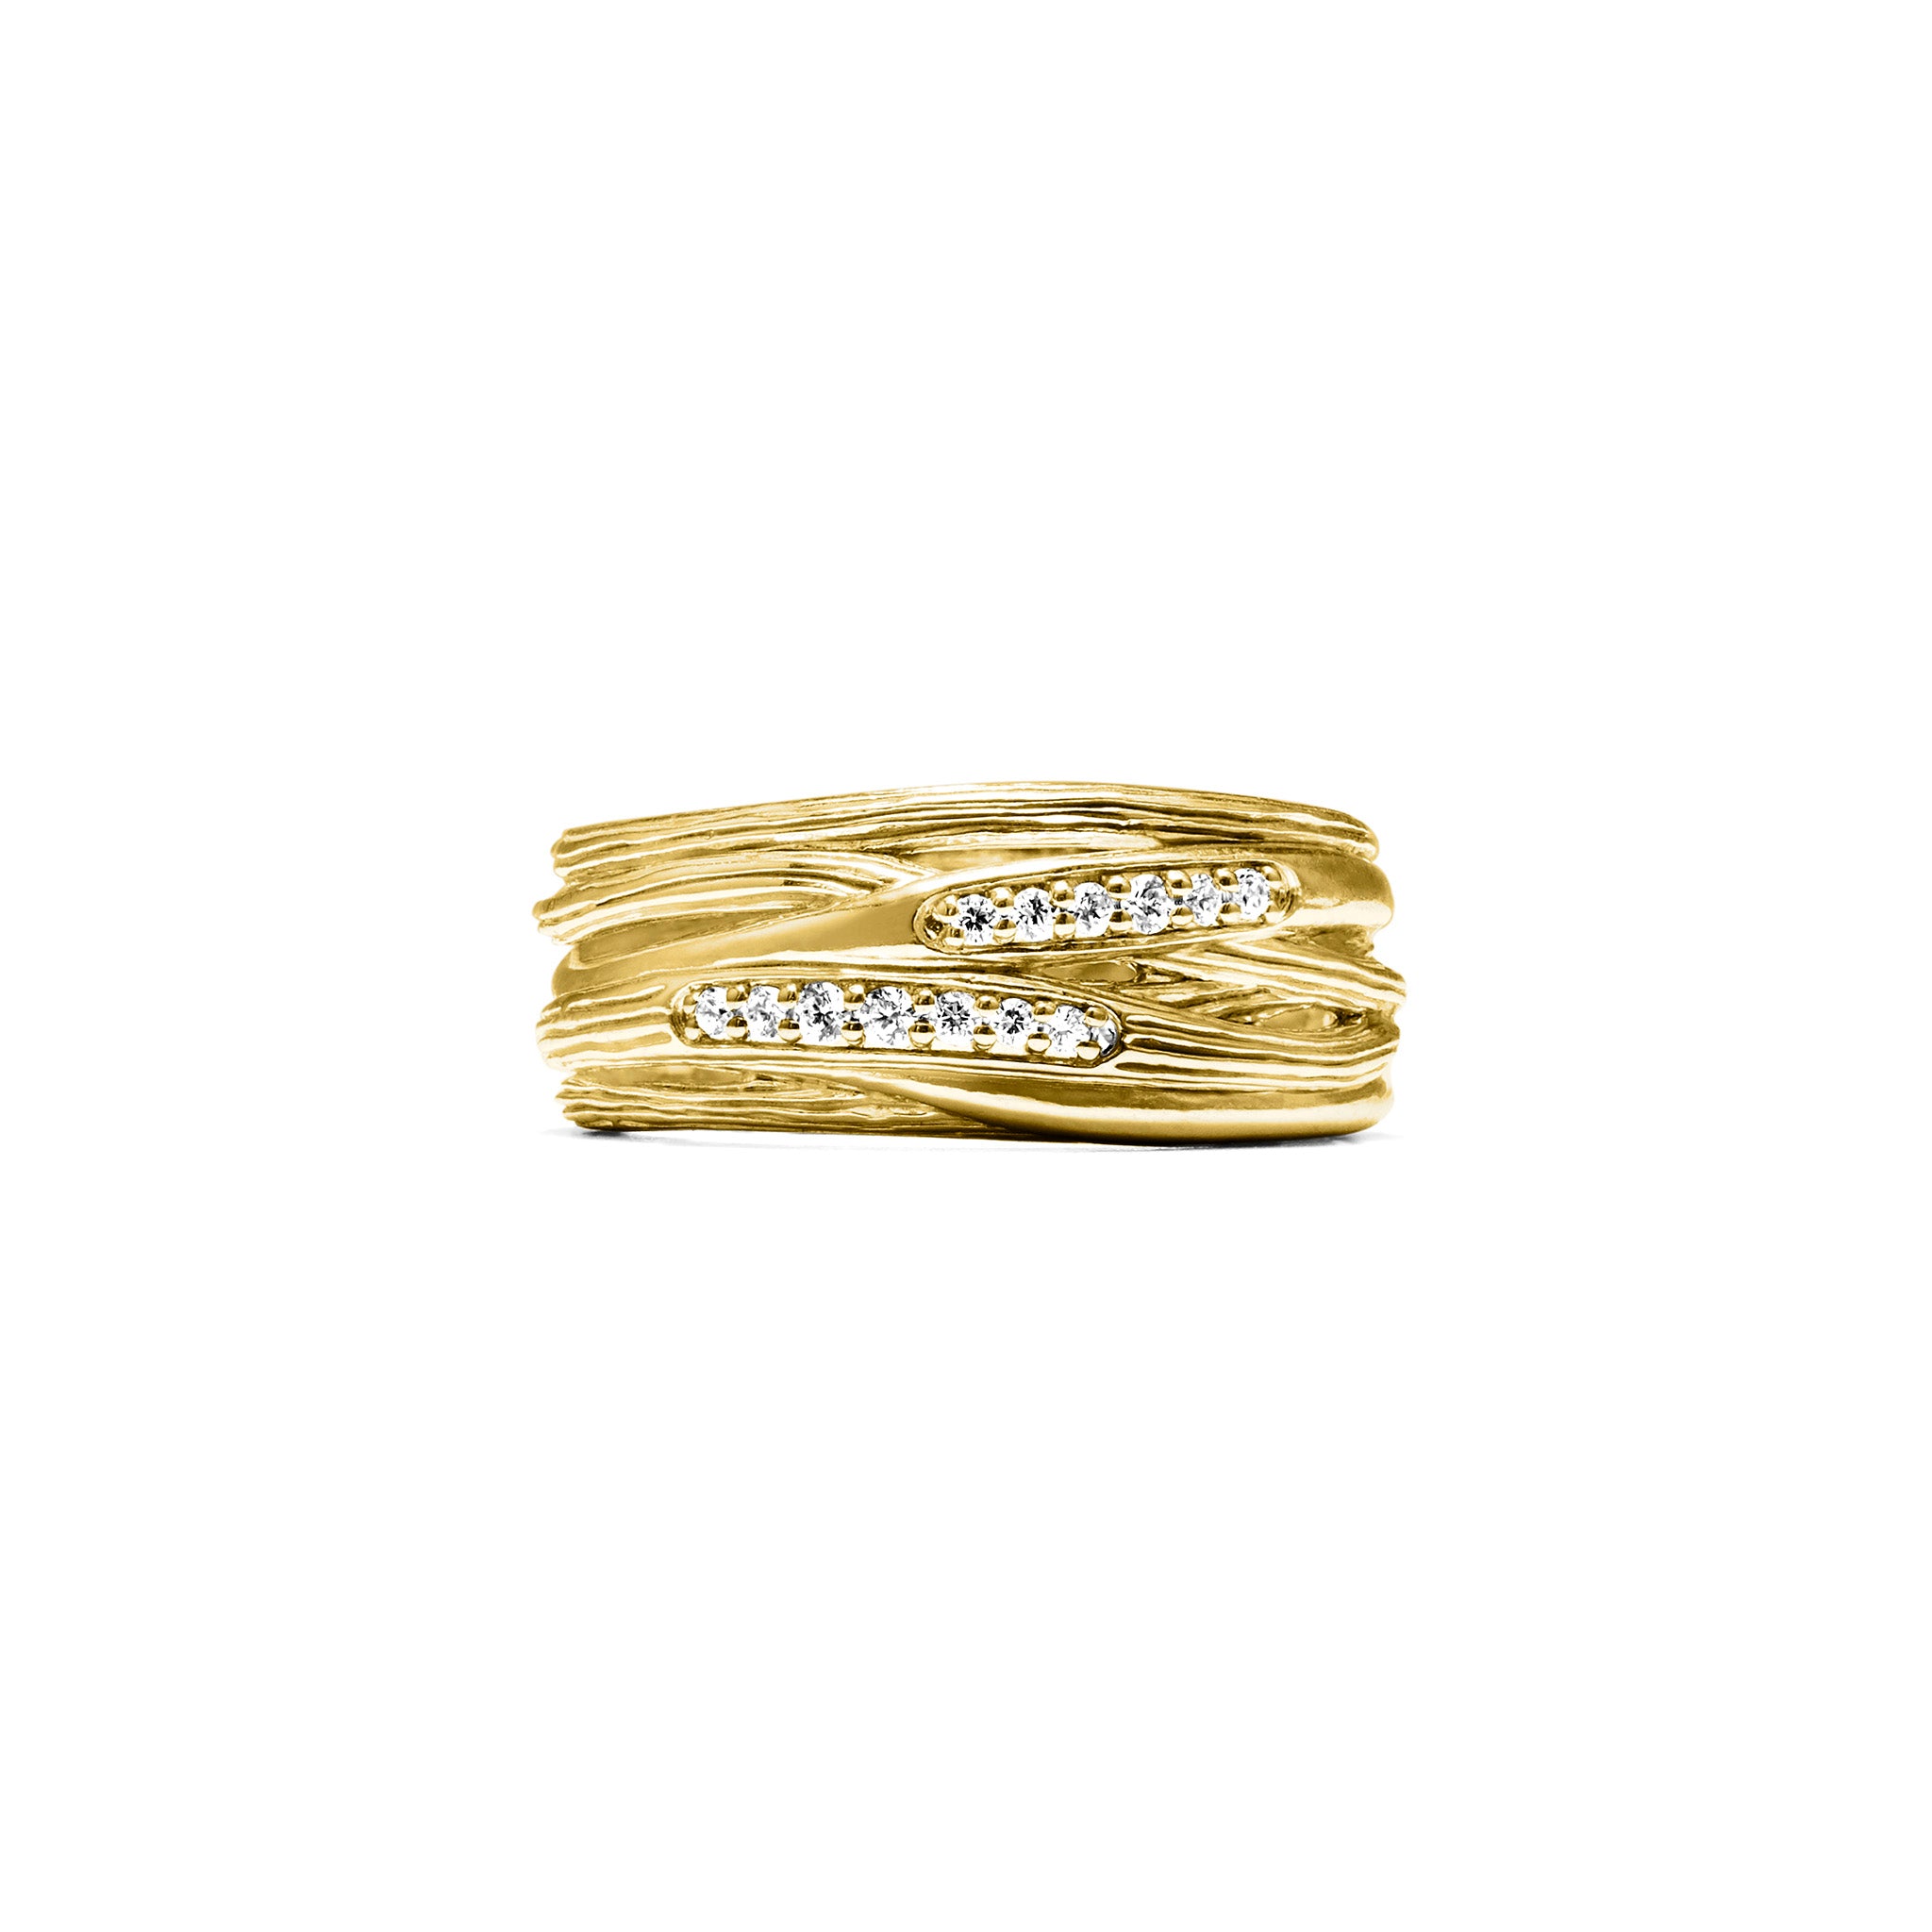 Santorini Band Ring With Diamonds In 18K